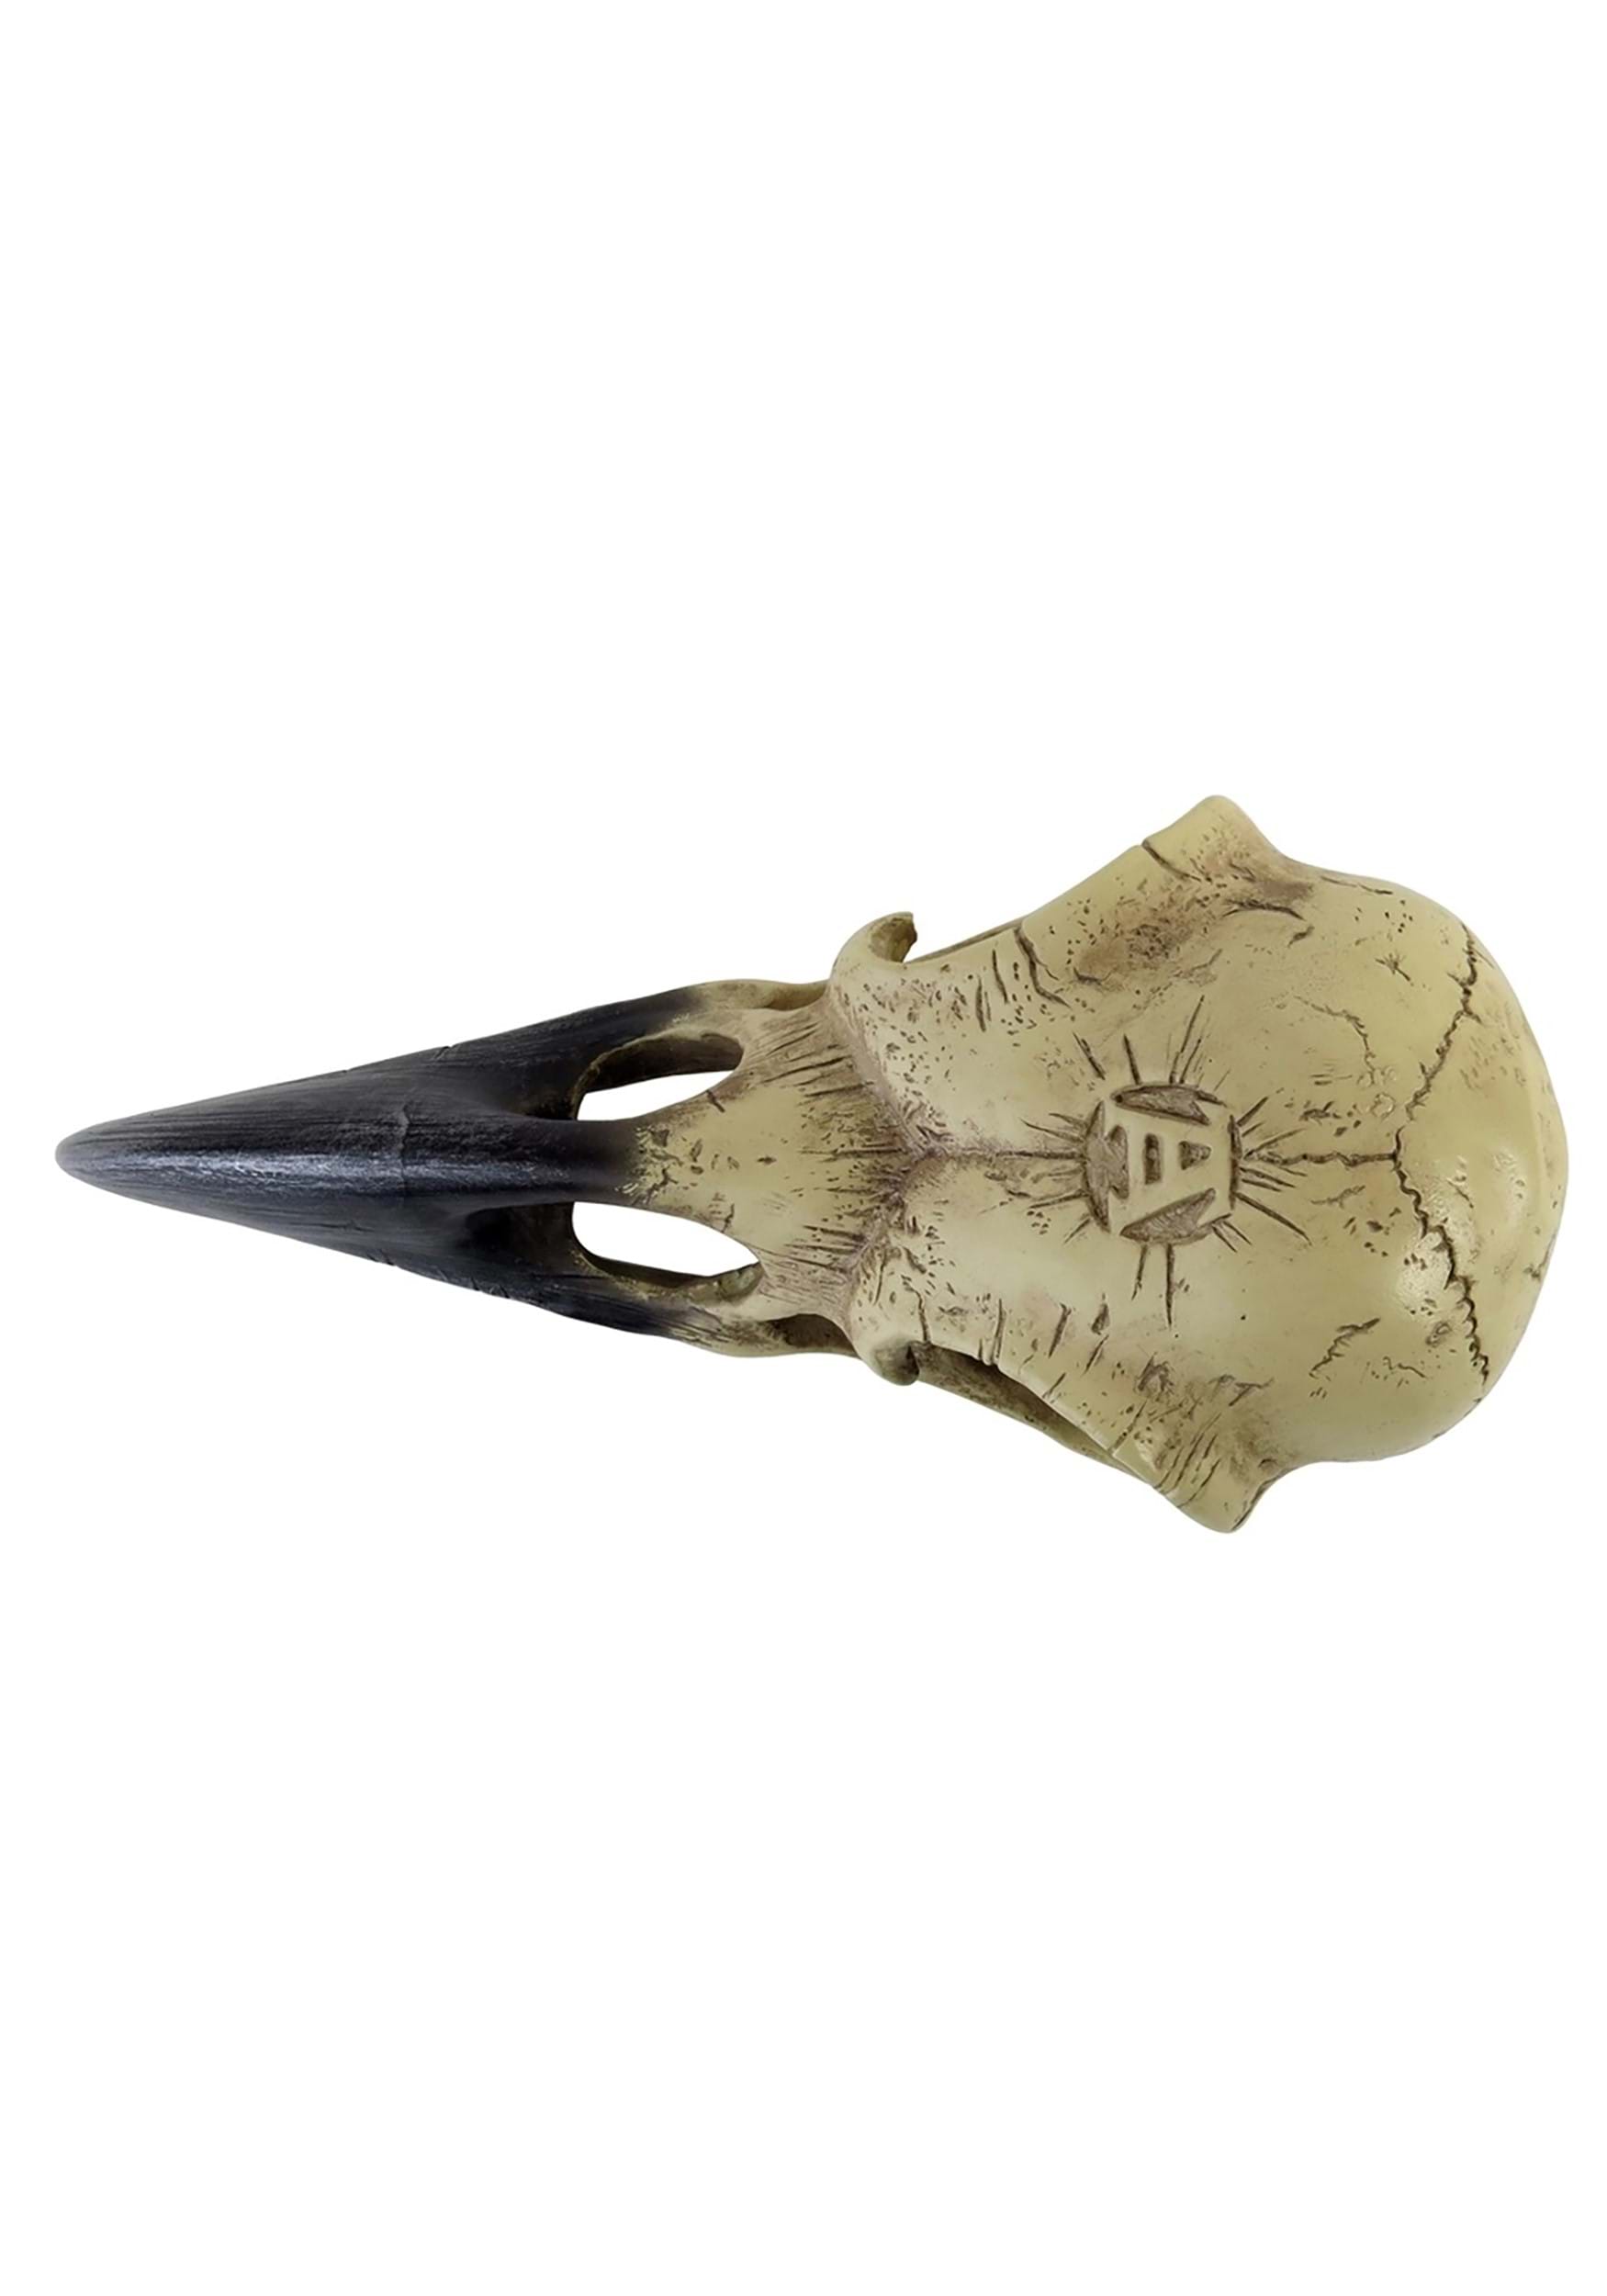 6 Inch Corvus Alchemica Skull